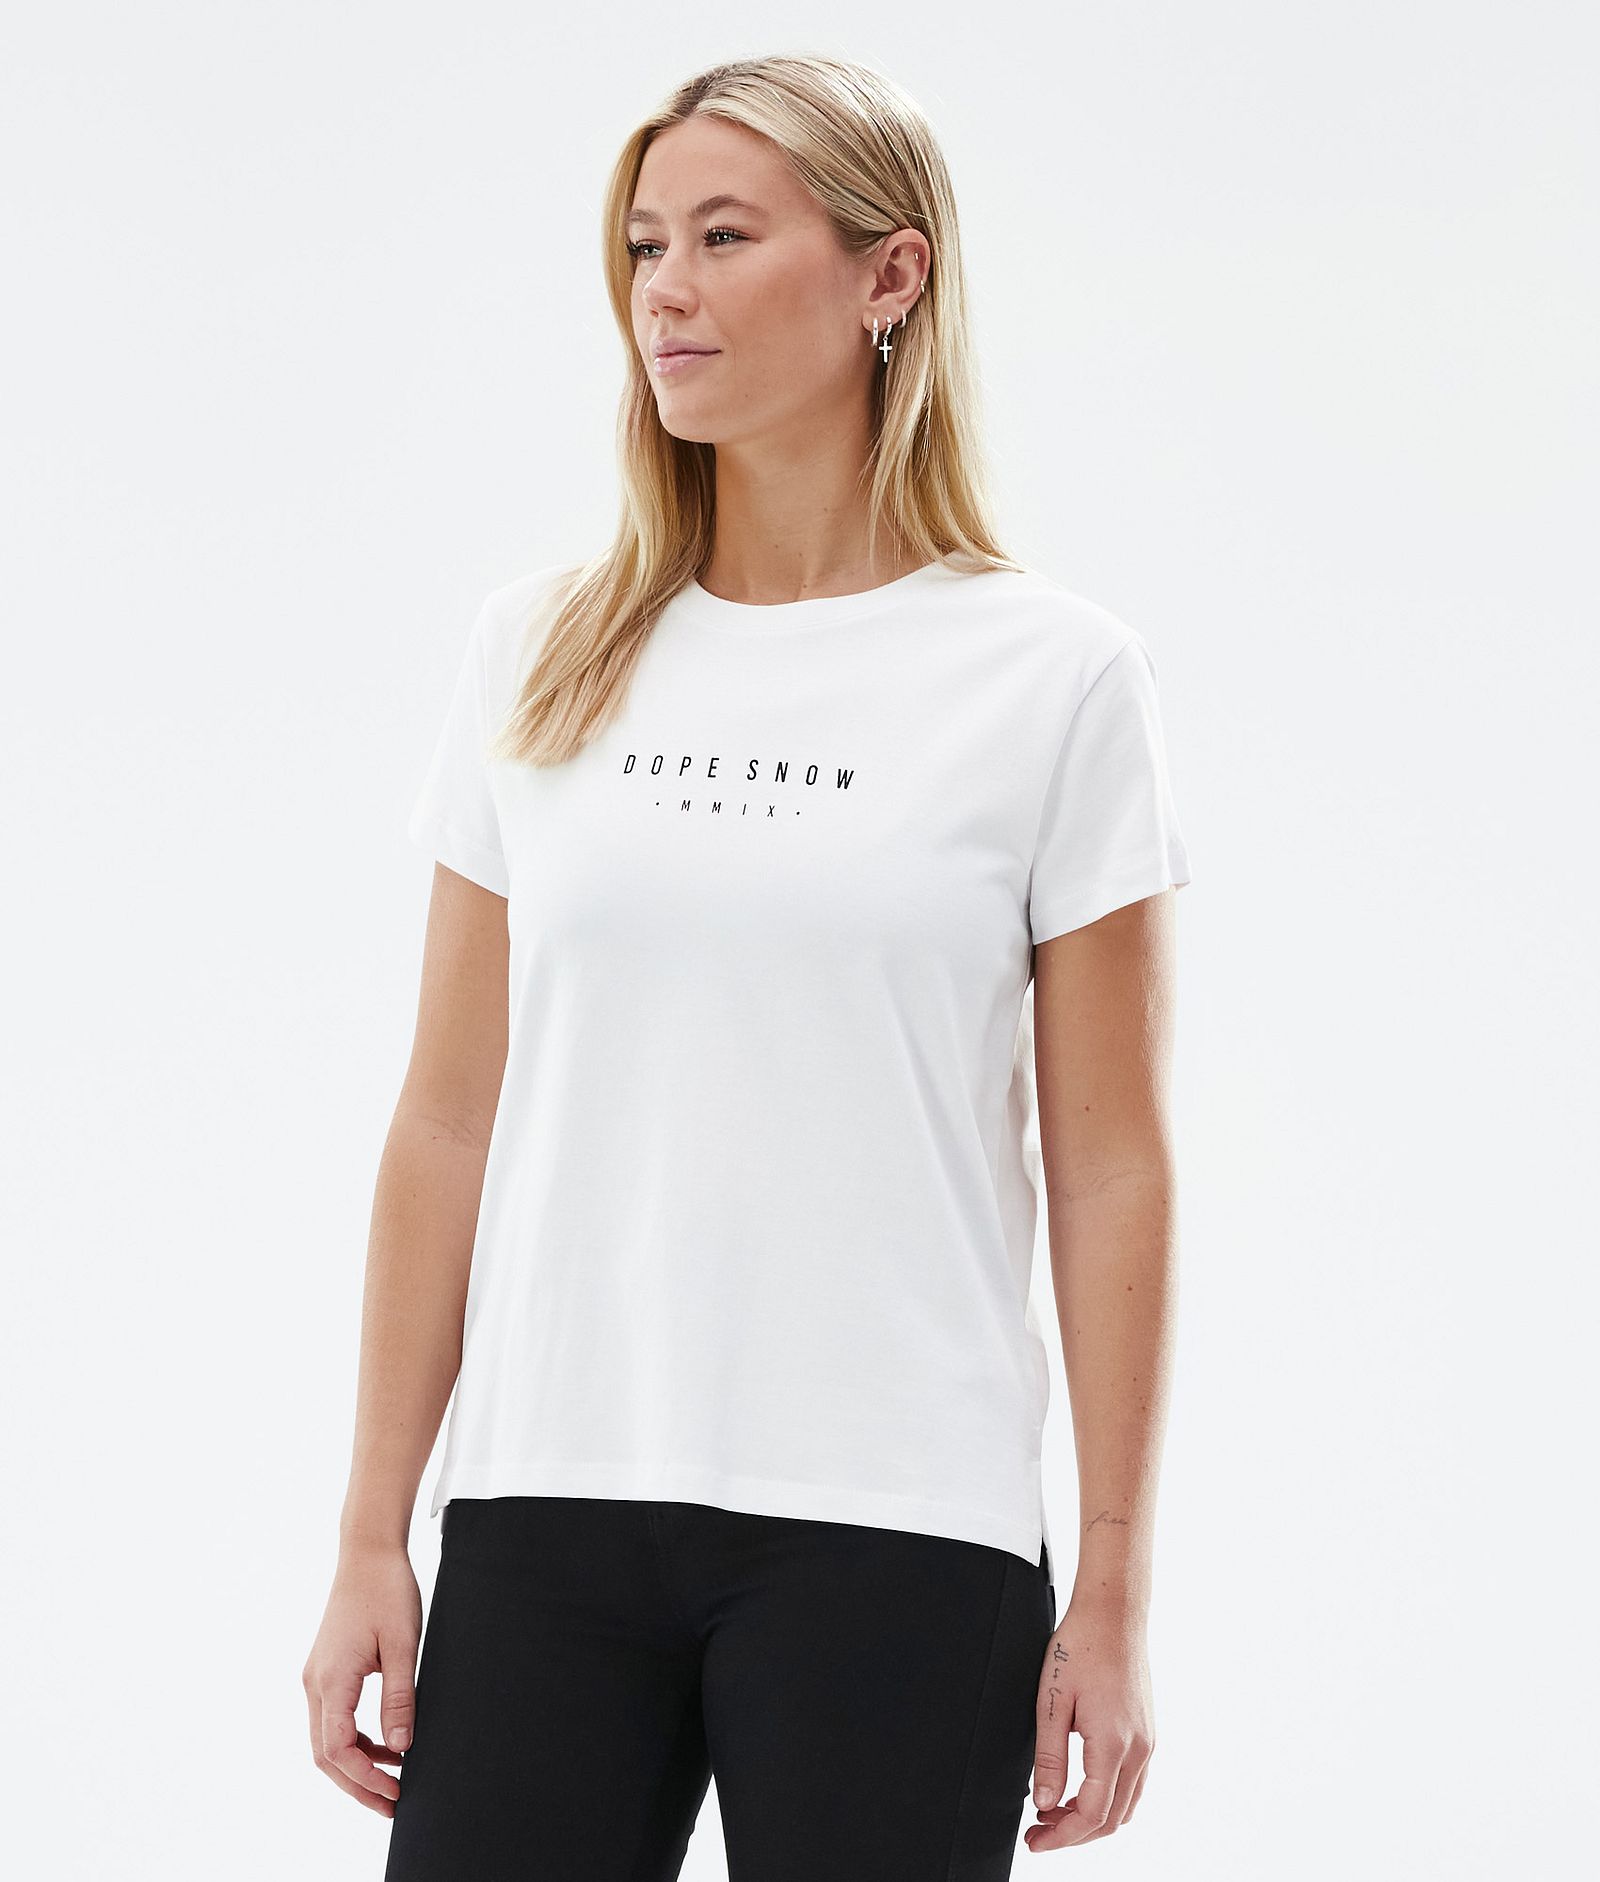 Standard W T-shirt Dame Silhouette White